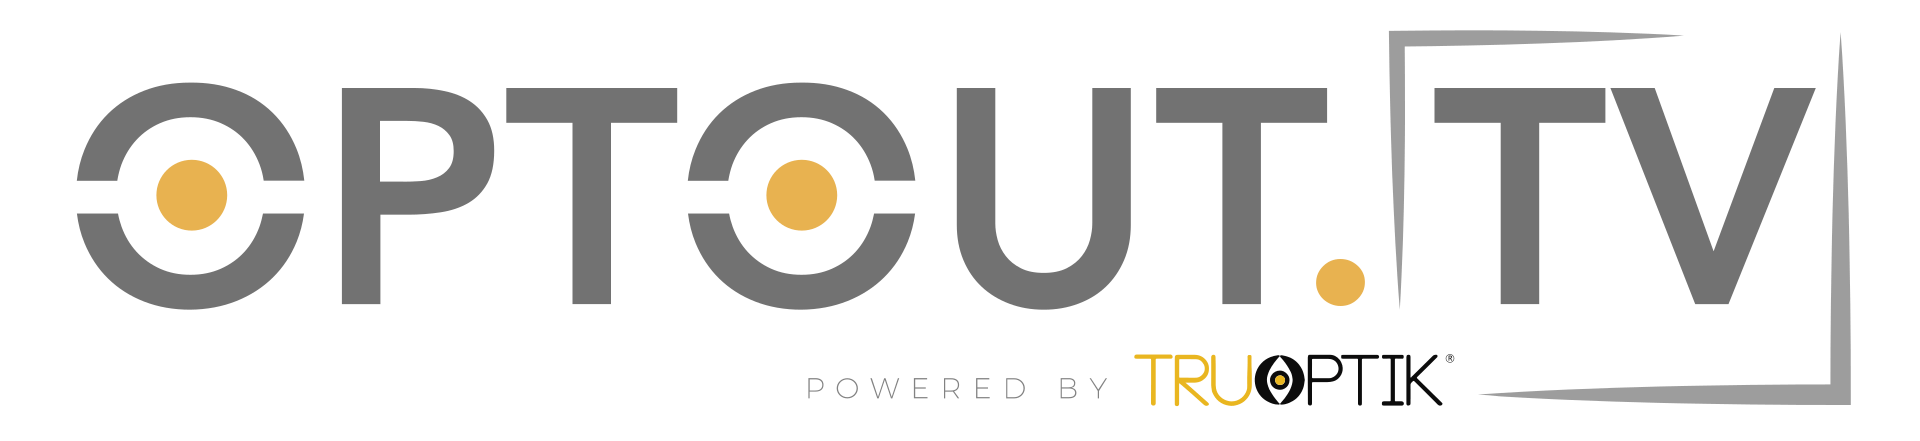 Ott Logo - OTT Marketing Cloud Overview | Tru Optik - Over-the-top, Connected ...